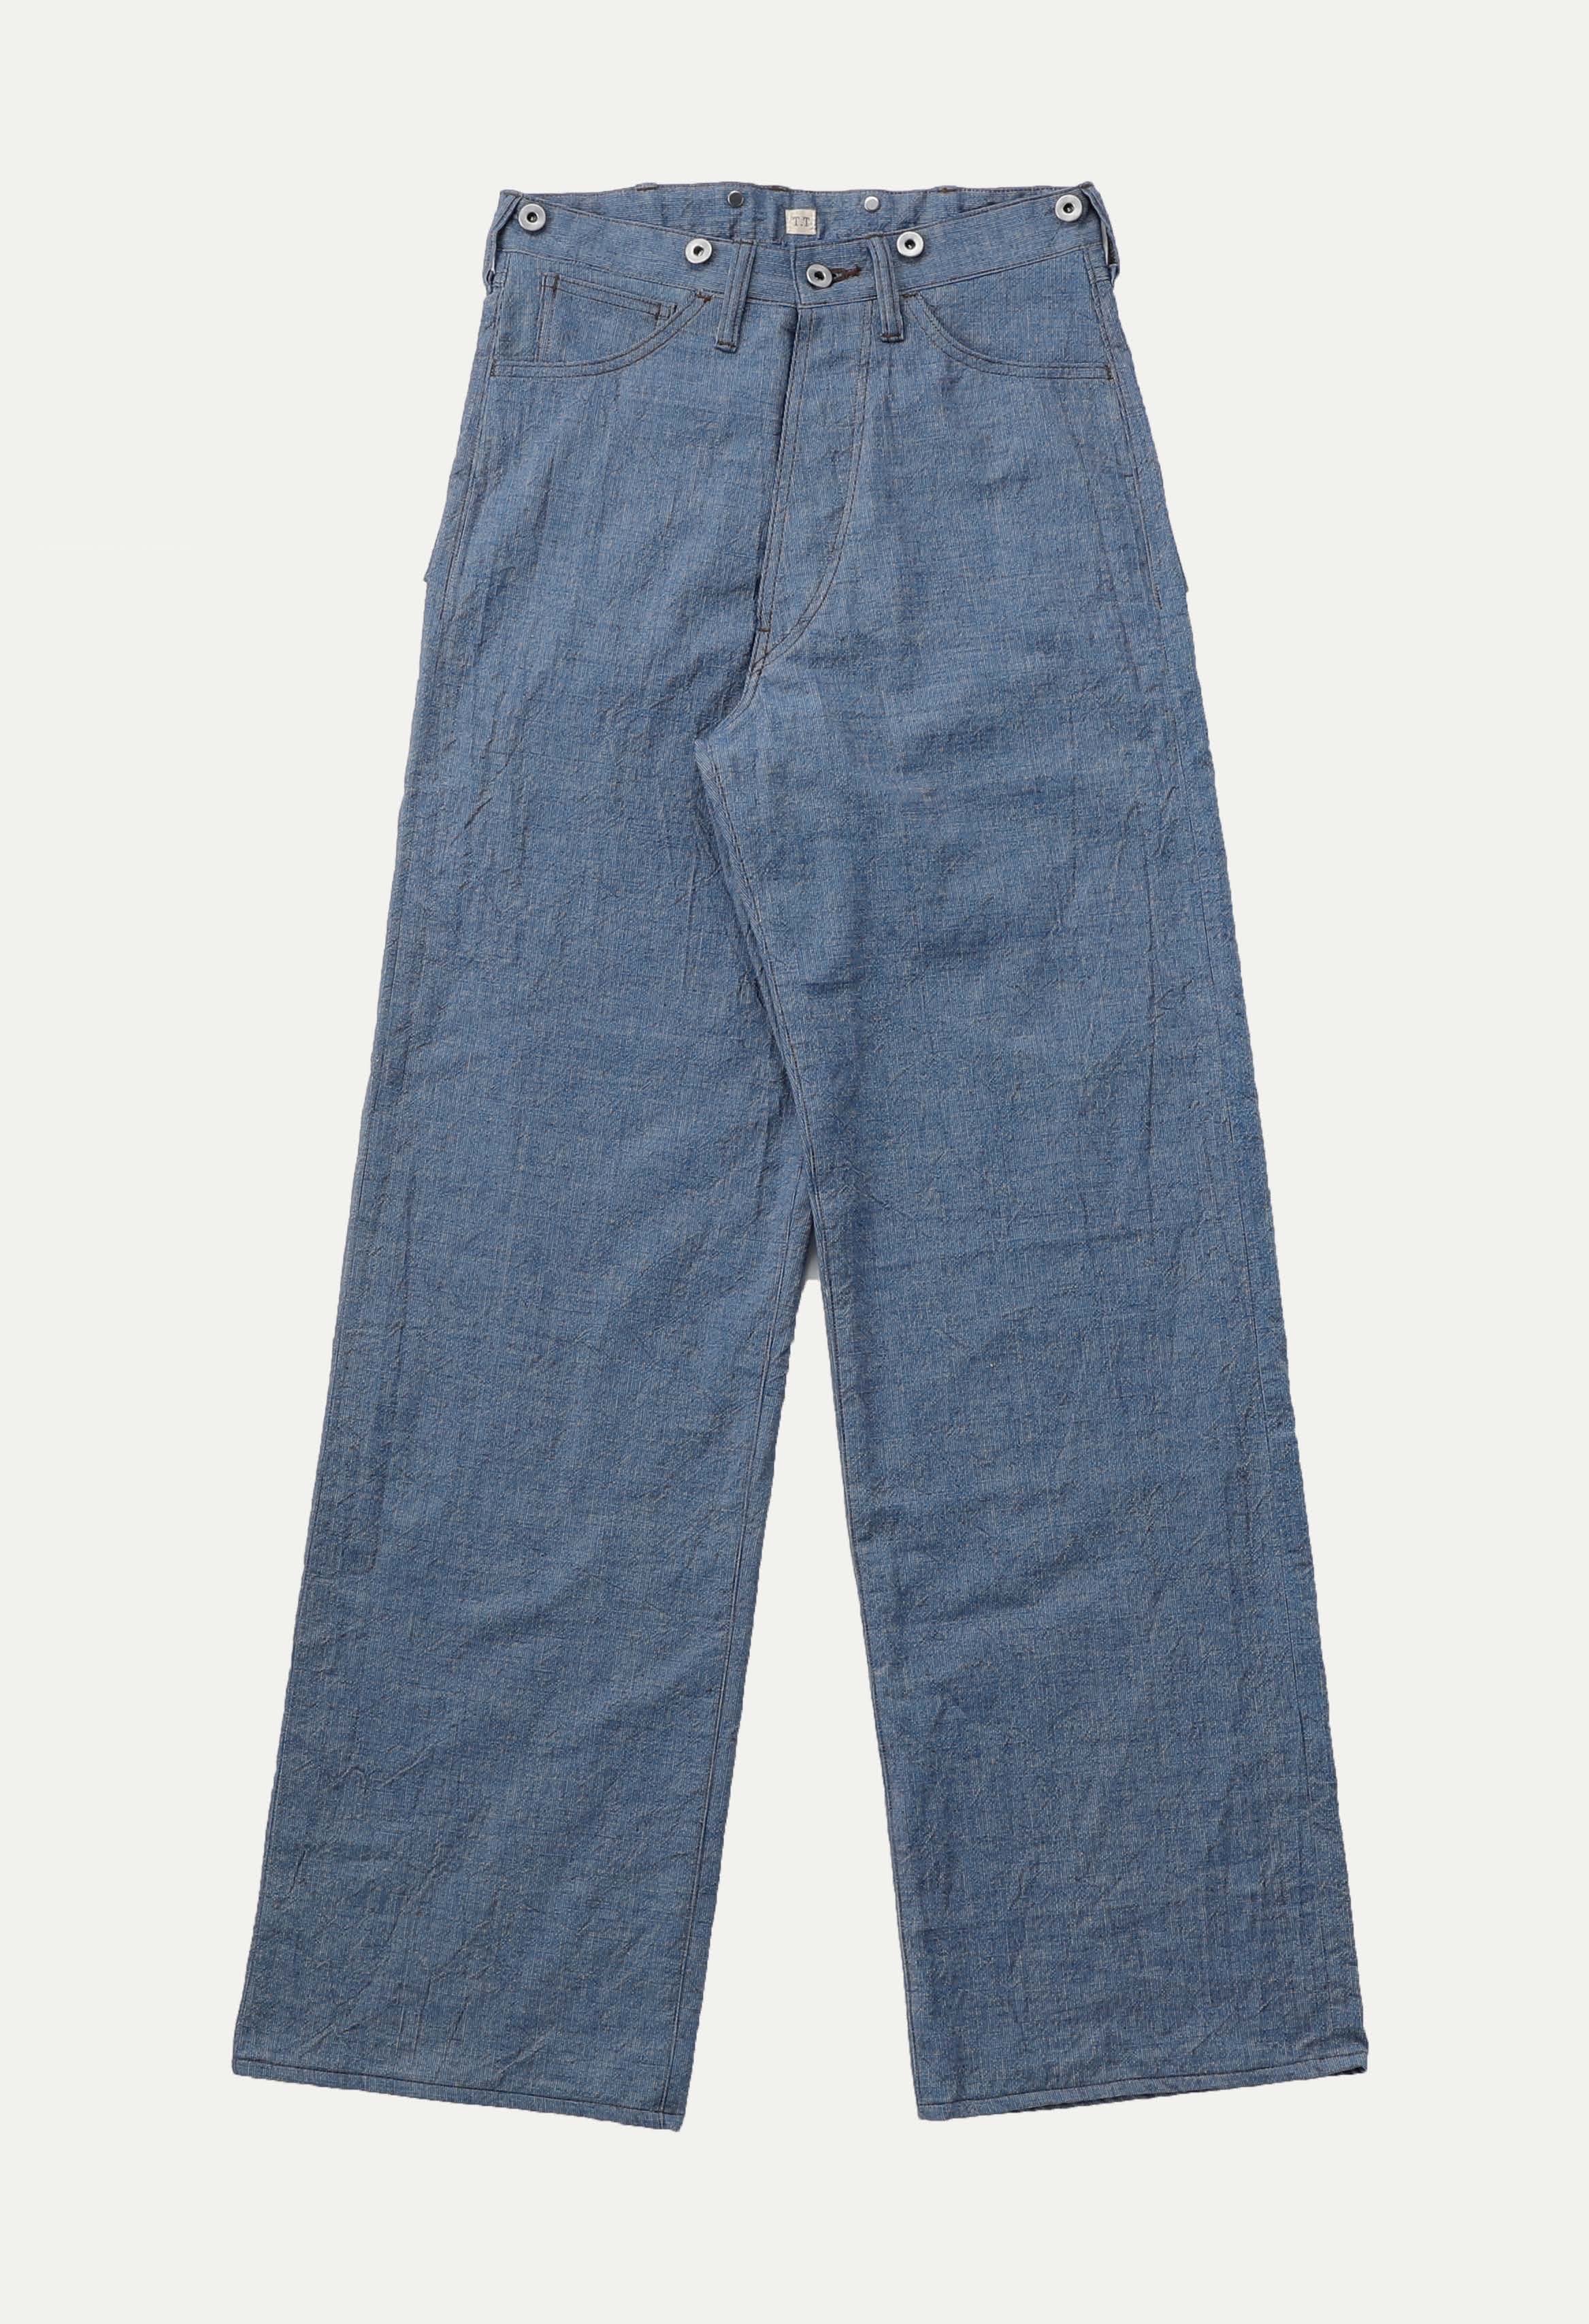 UPDATE] Taiga Takahashi LOT. 704 Trousers (c. 1920s) - Here's some